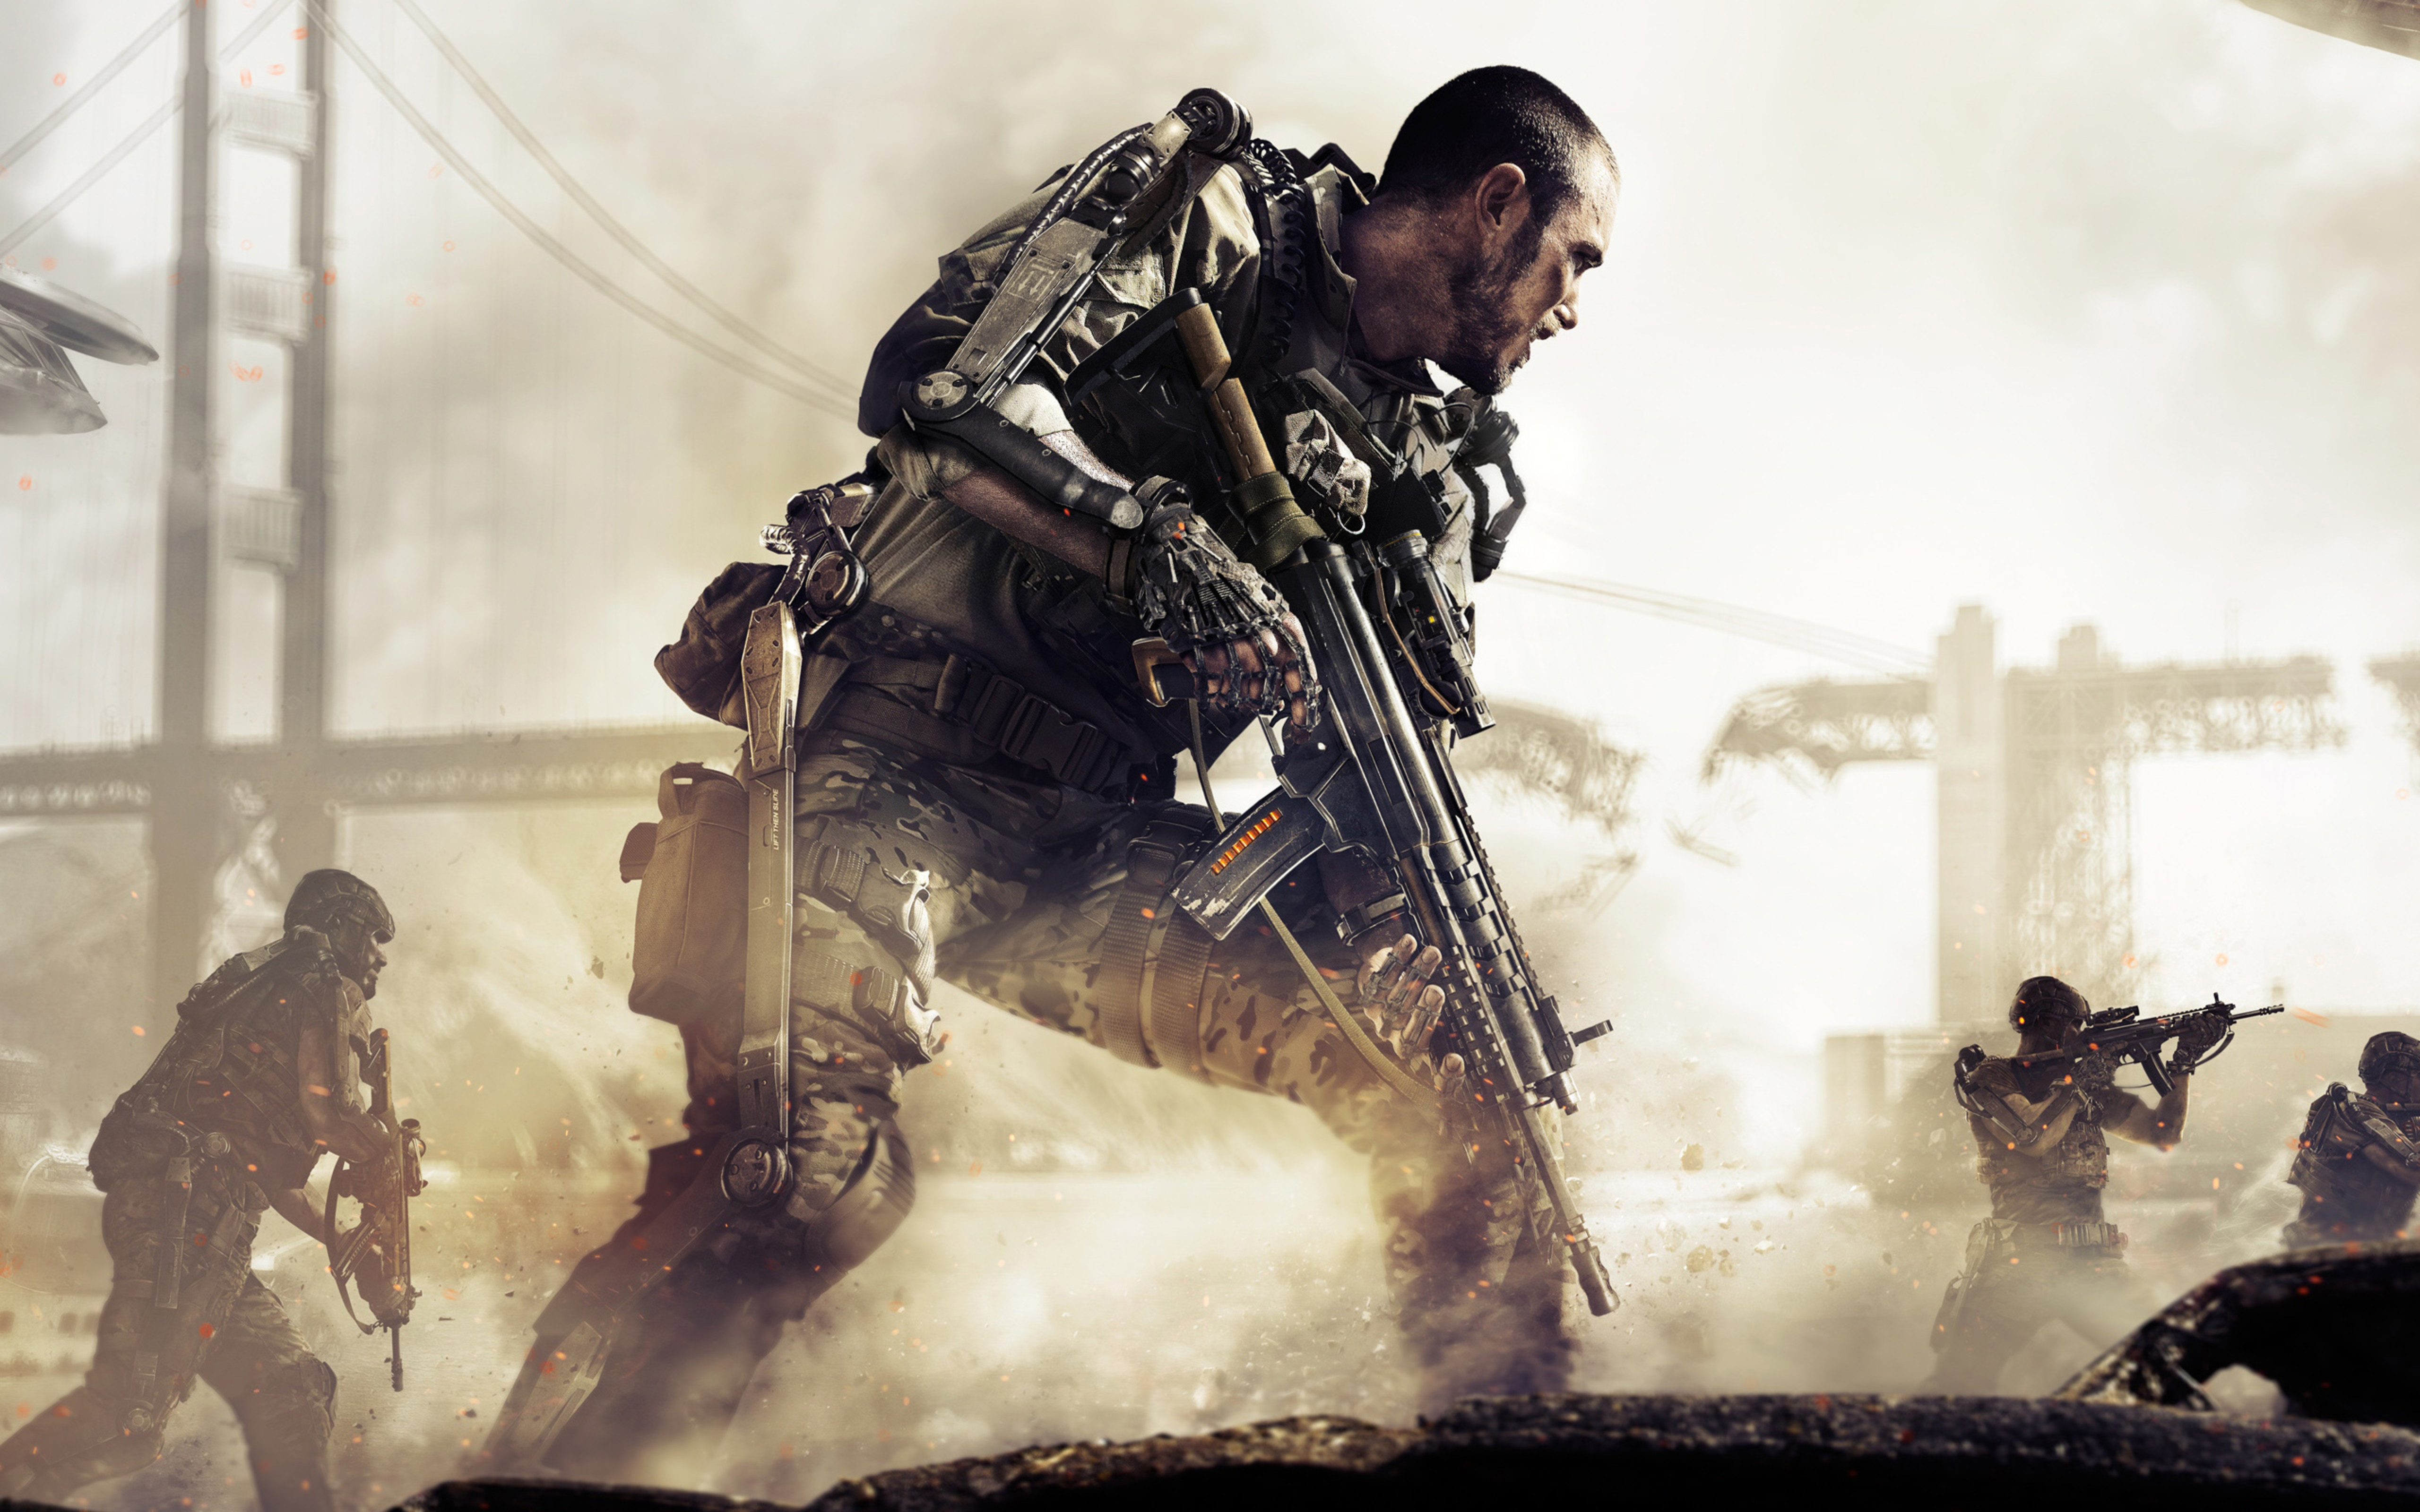 Download Wallpaper 5120x3200 Call of Duty Advanced Warfare battlefield 5120x3200